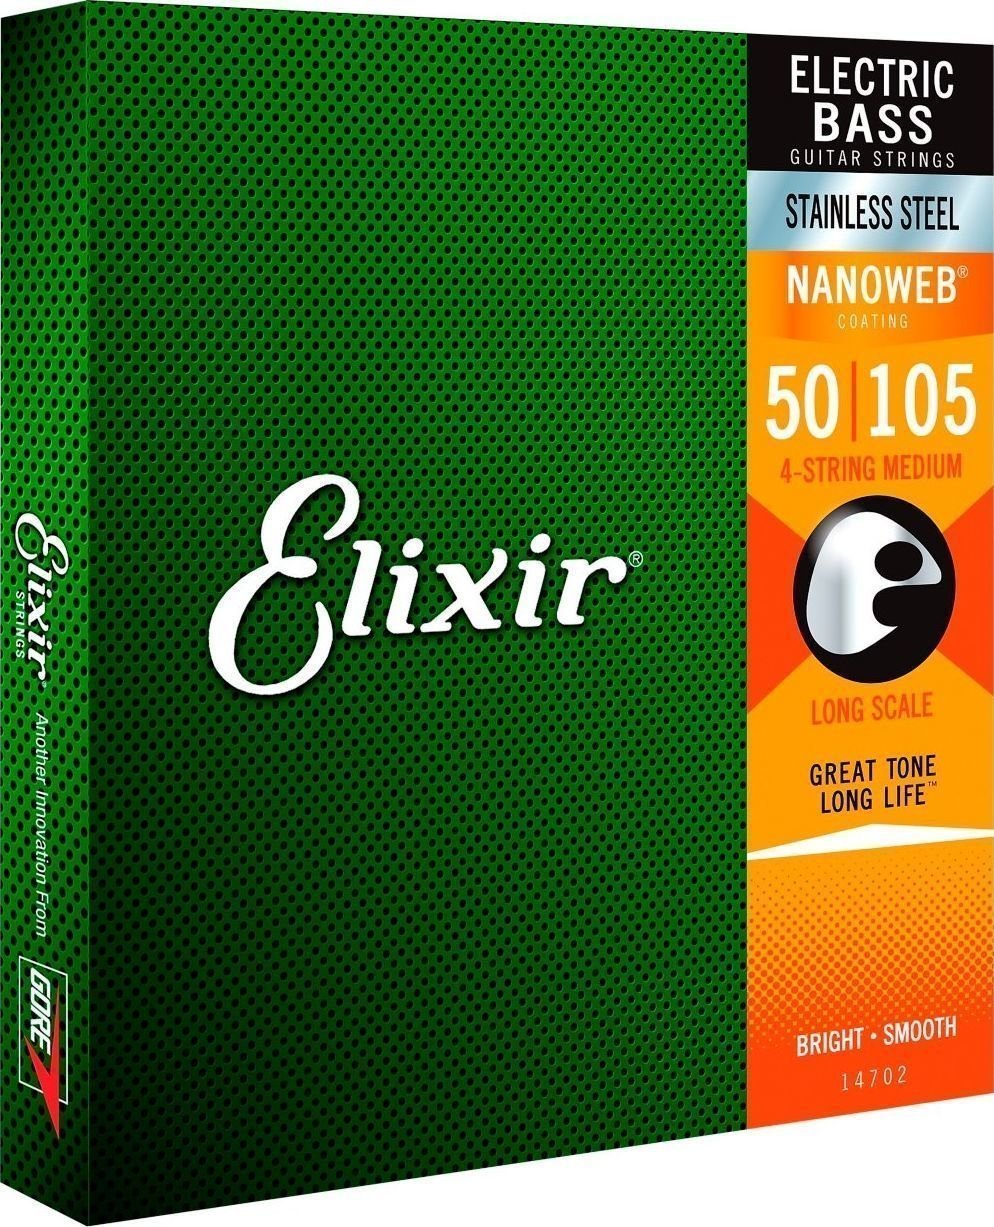 Struny pro baskytaru Elixir 14702 Nanoweb